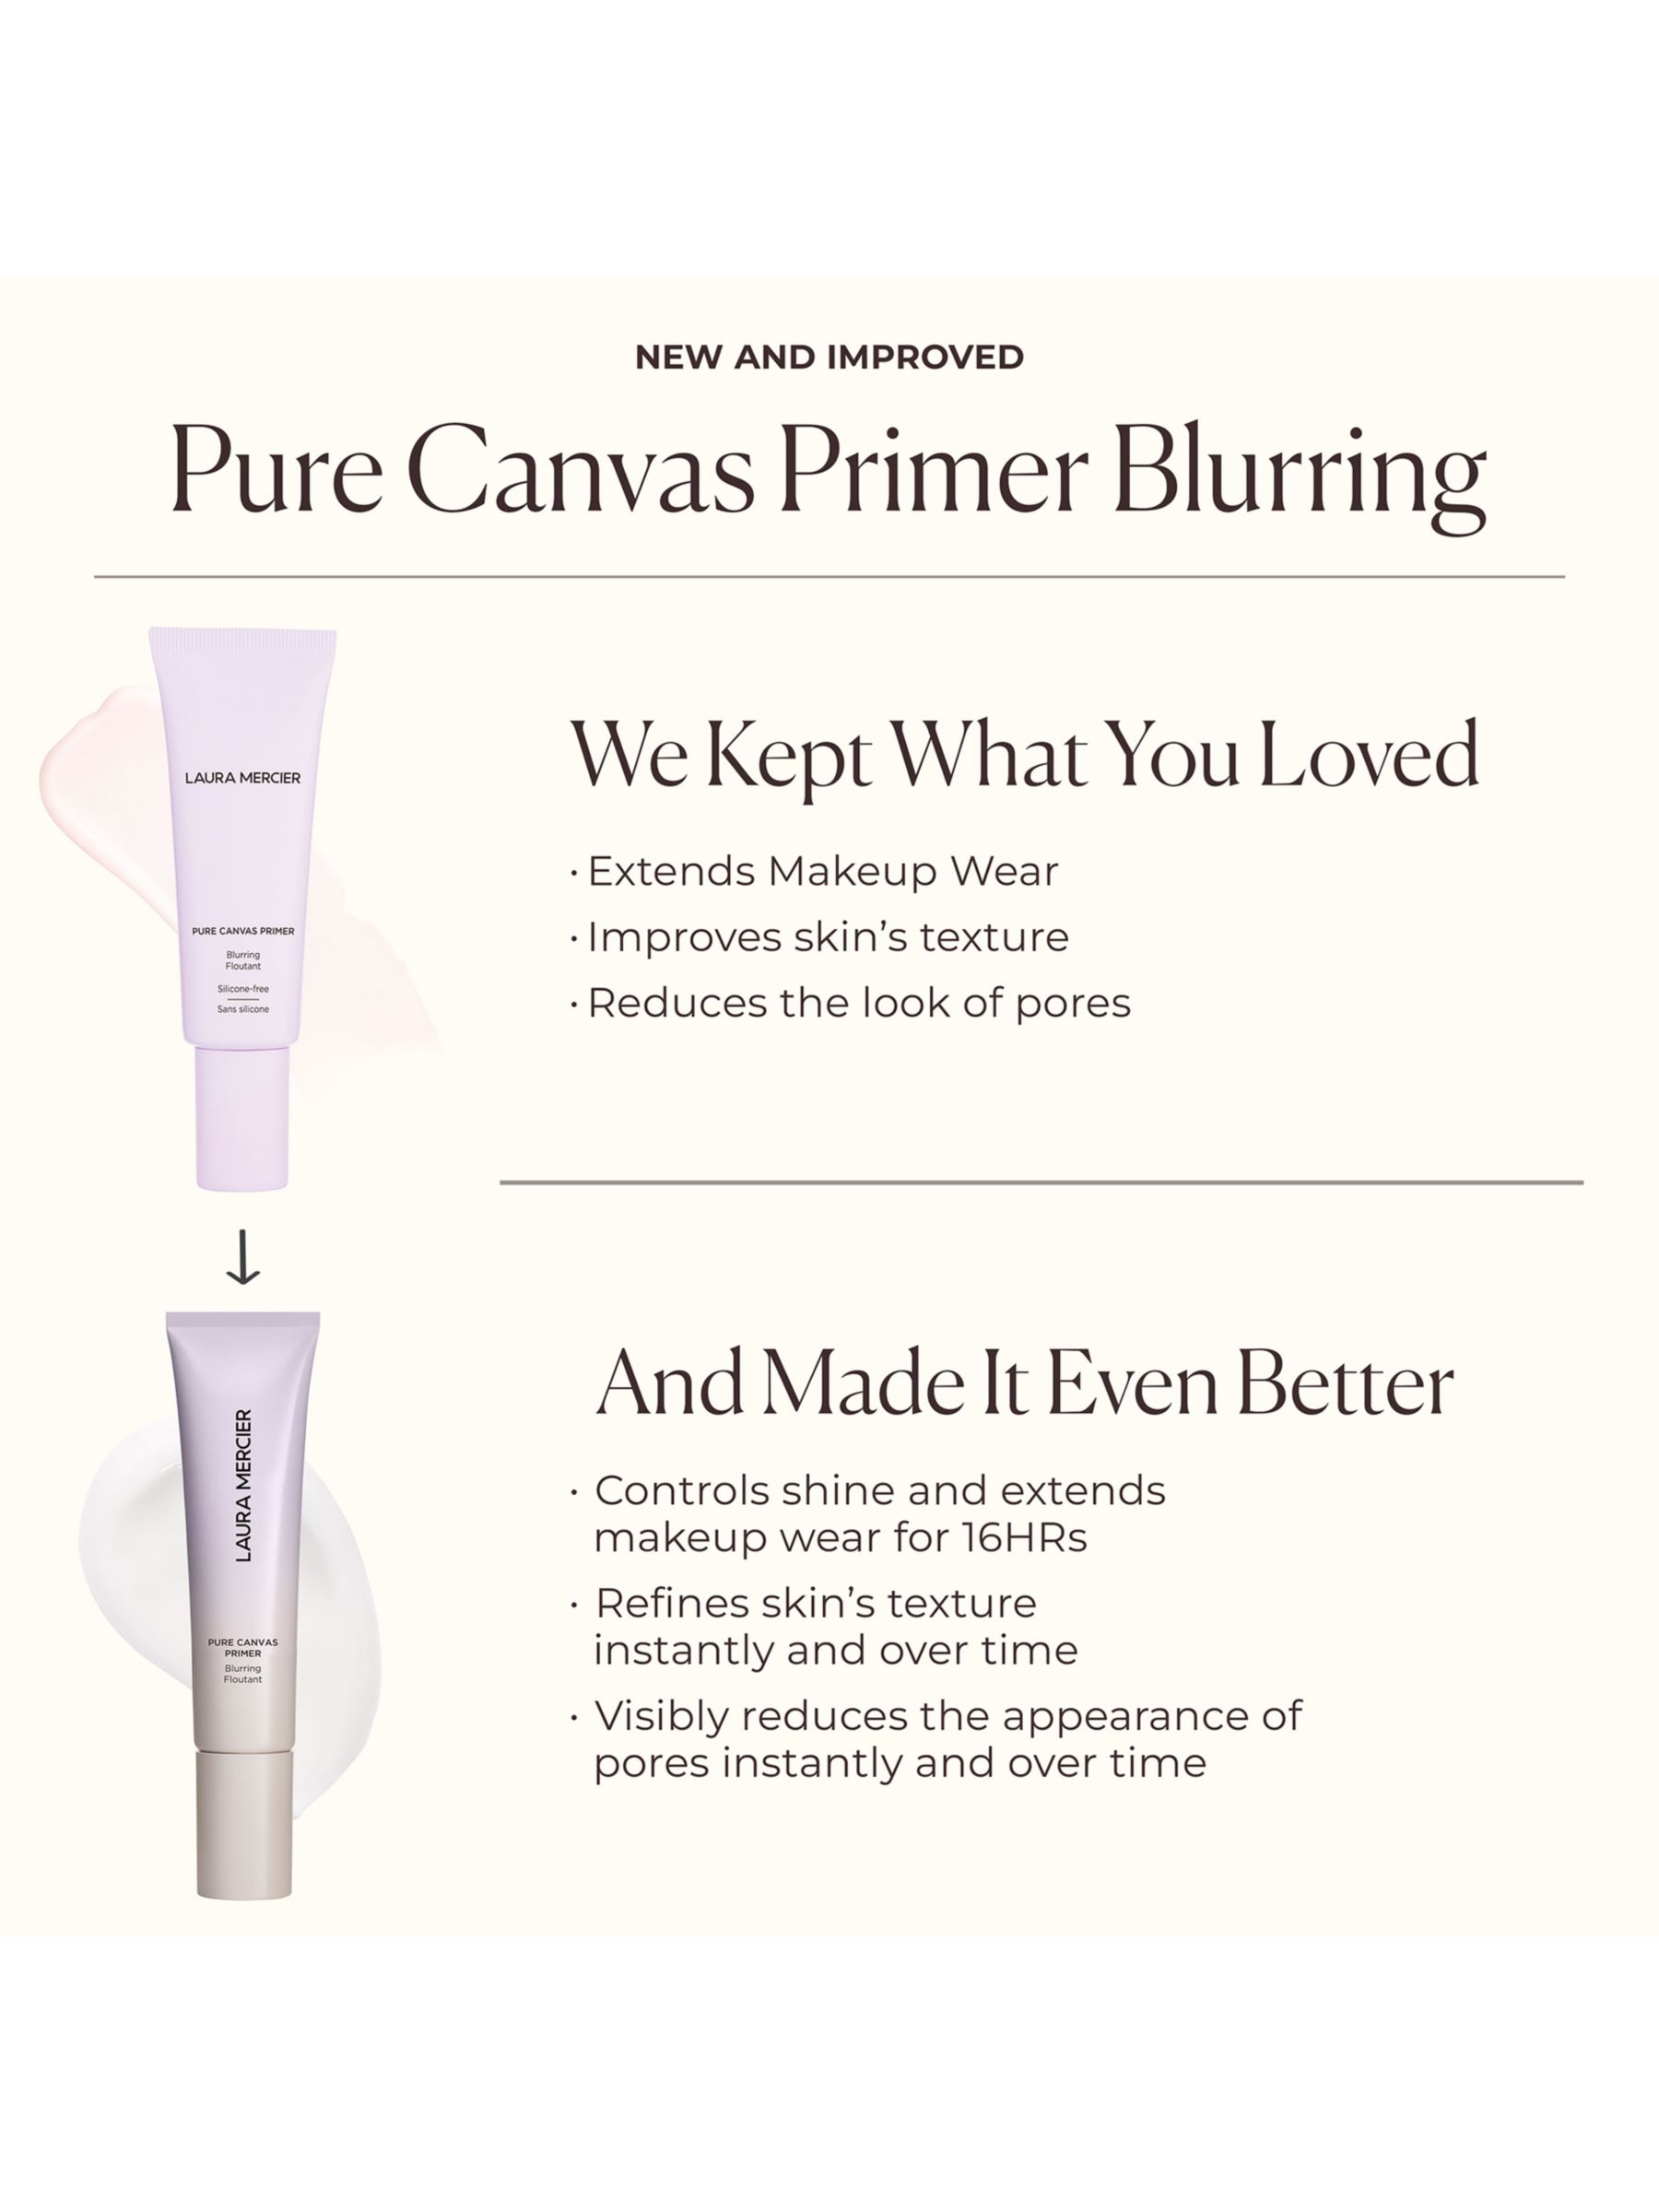 Laura Mercier Pure Canvas Primer Blurring, 15ml 9